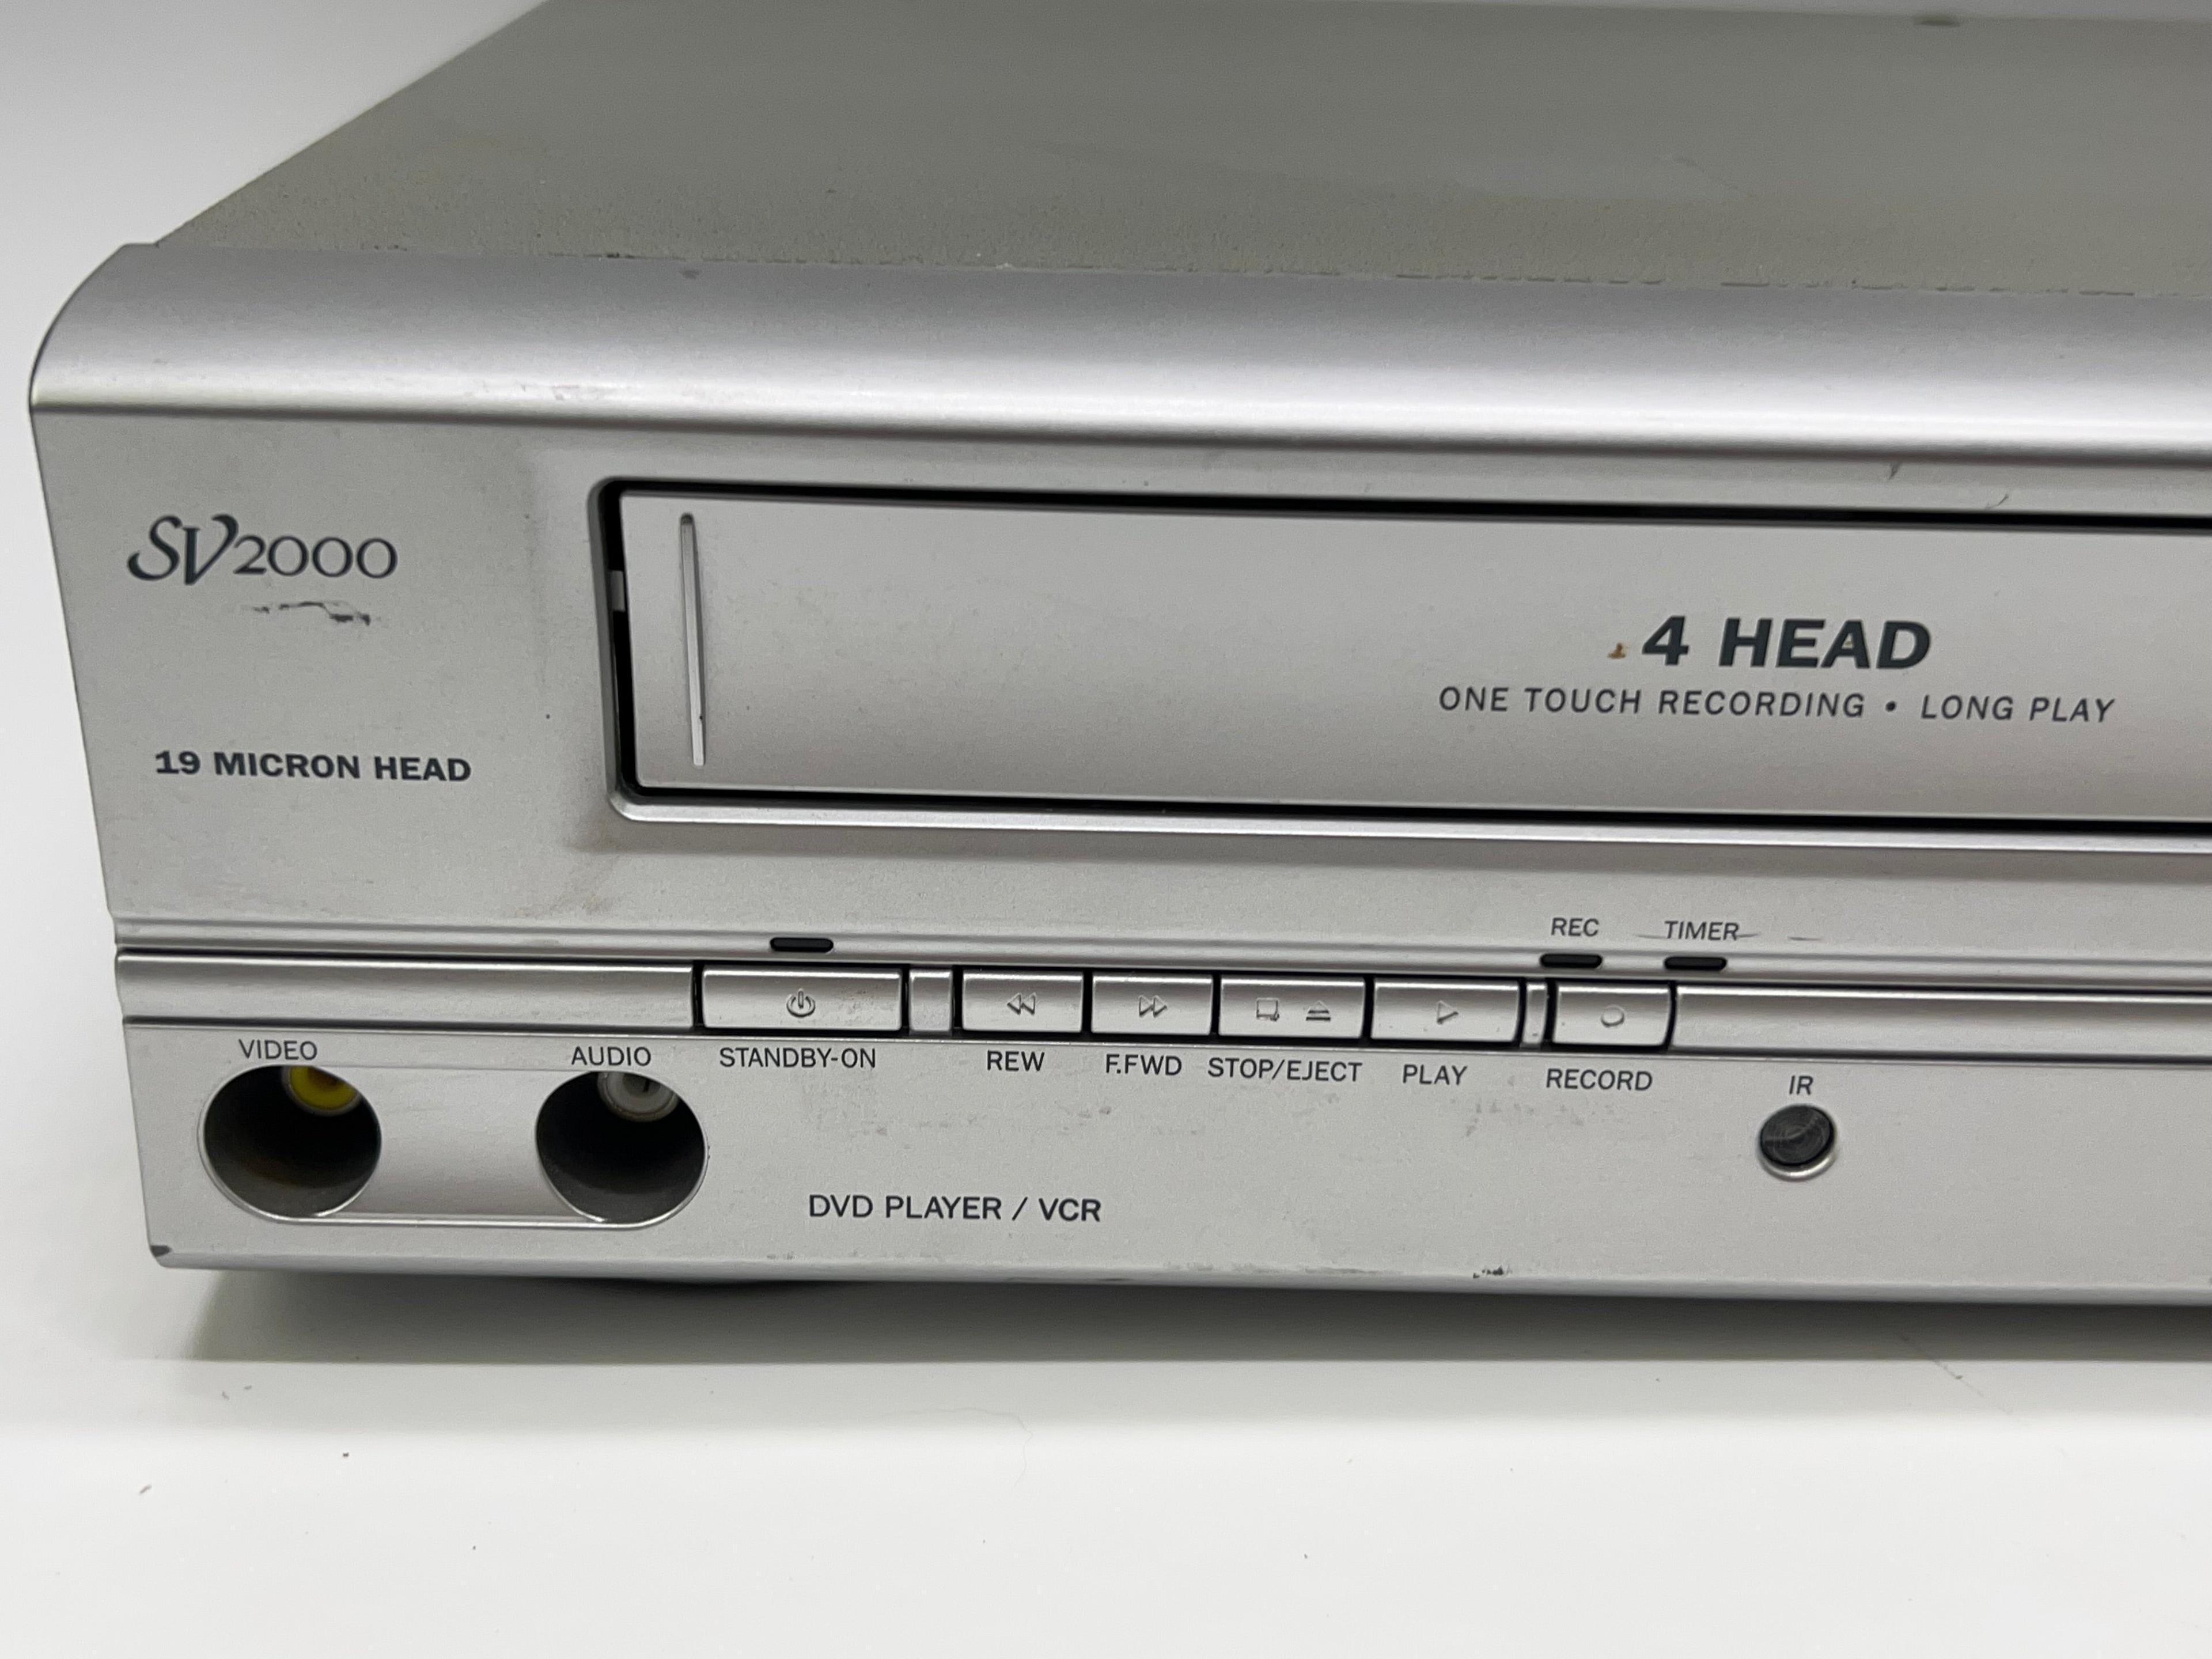 Alternate View 2 of SV2000 FUNAI WV806 DVD Player / VCR VHS Combo 4-Head Recorder No